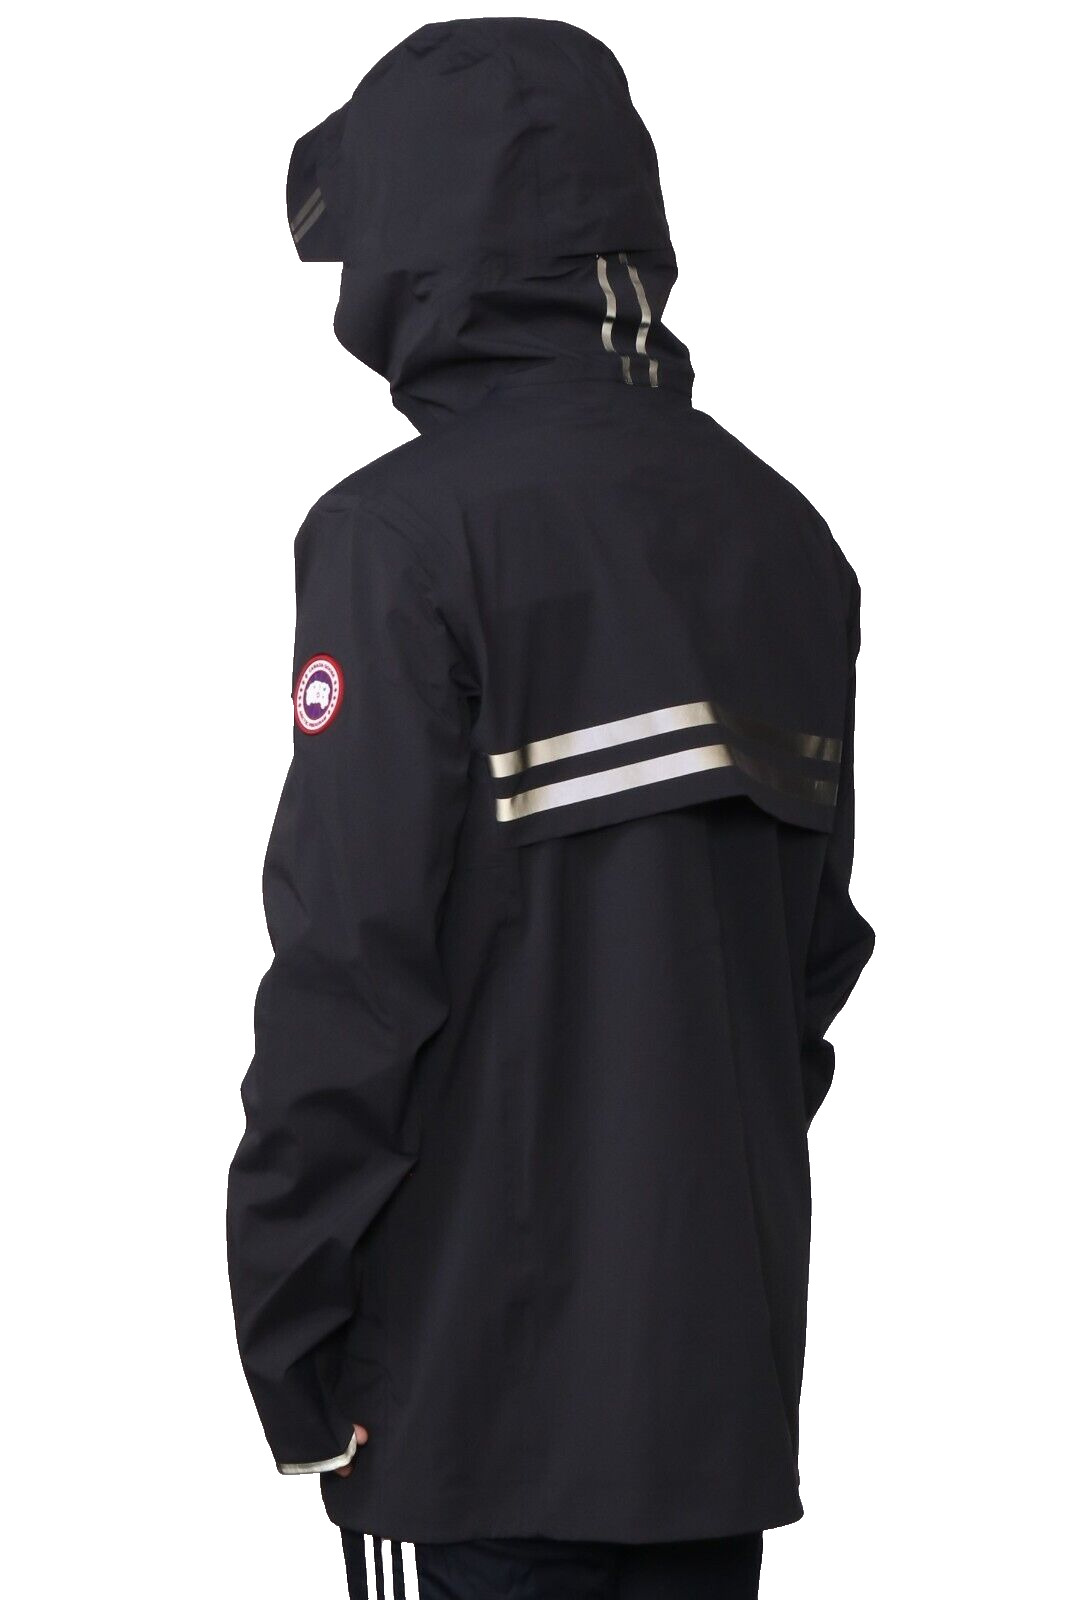 CANADA GOOSE rain jacket Nanaimo Jacket 5608M 61 BLACK Tri-Durance fabric size M